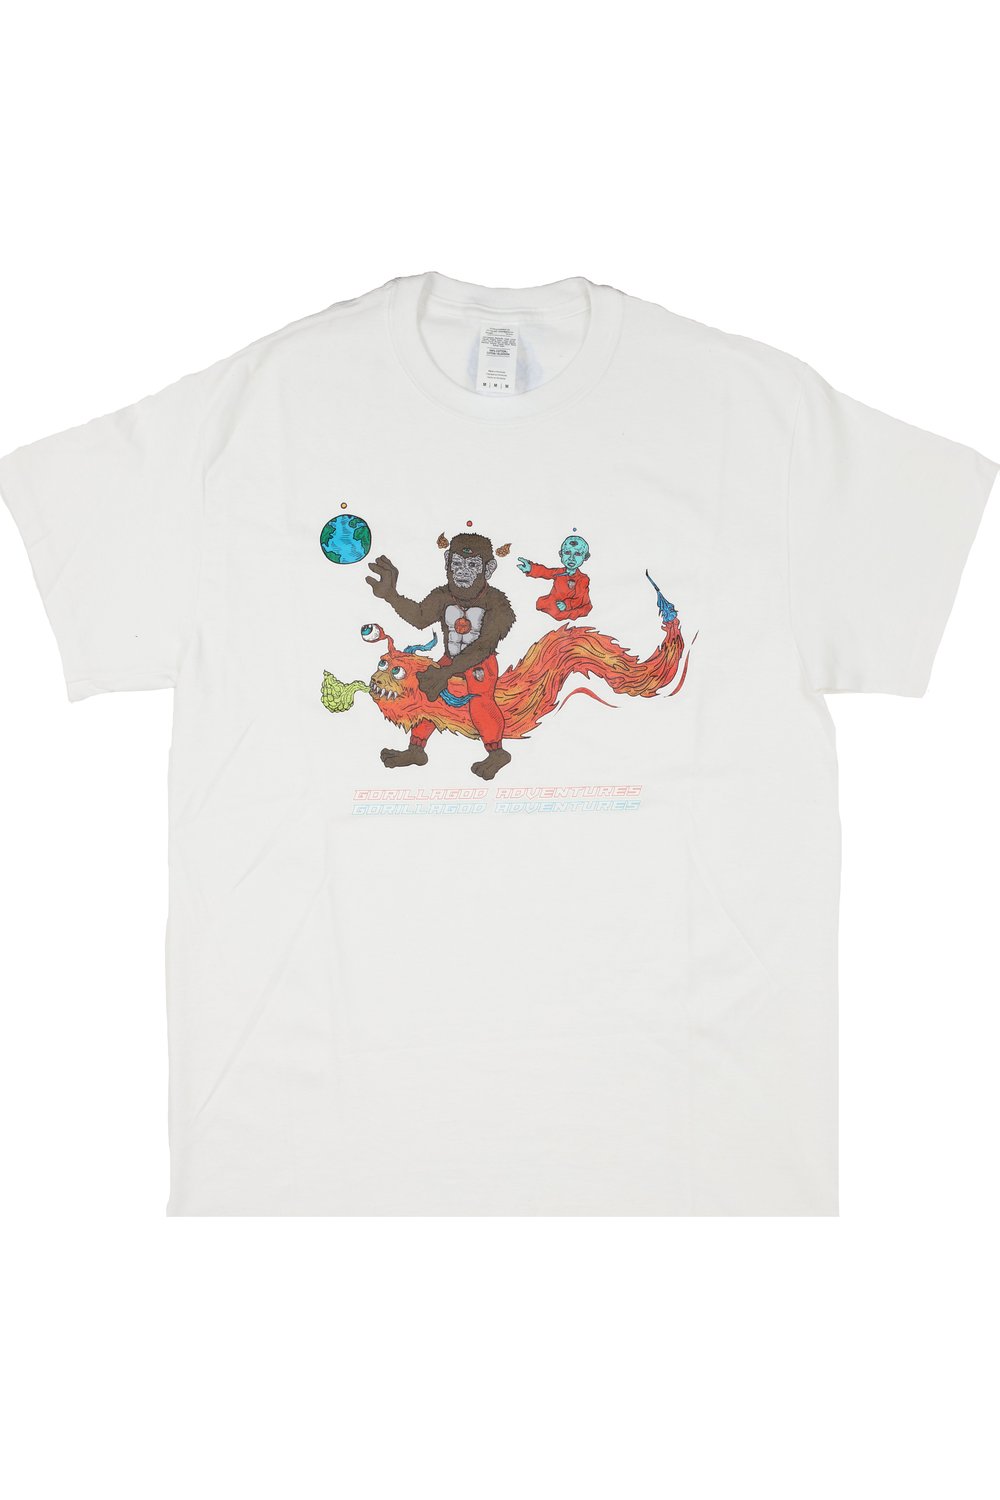 Image of White 'Gorilla God Adventures' T-Shirt